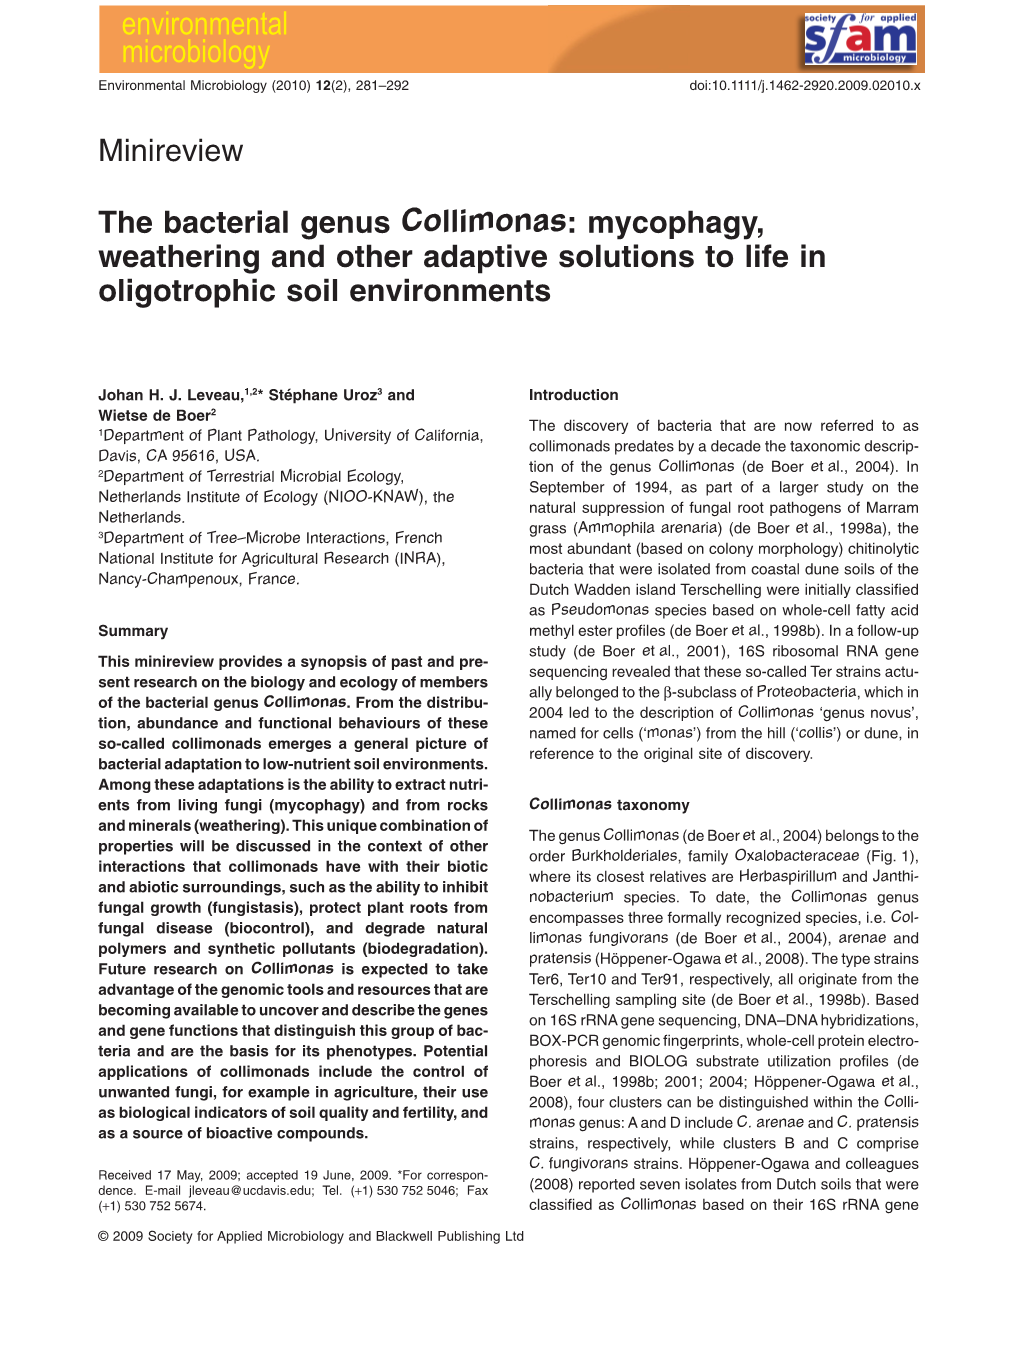 Minireview the Bacterial Genus Collimonas